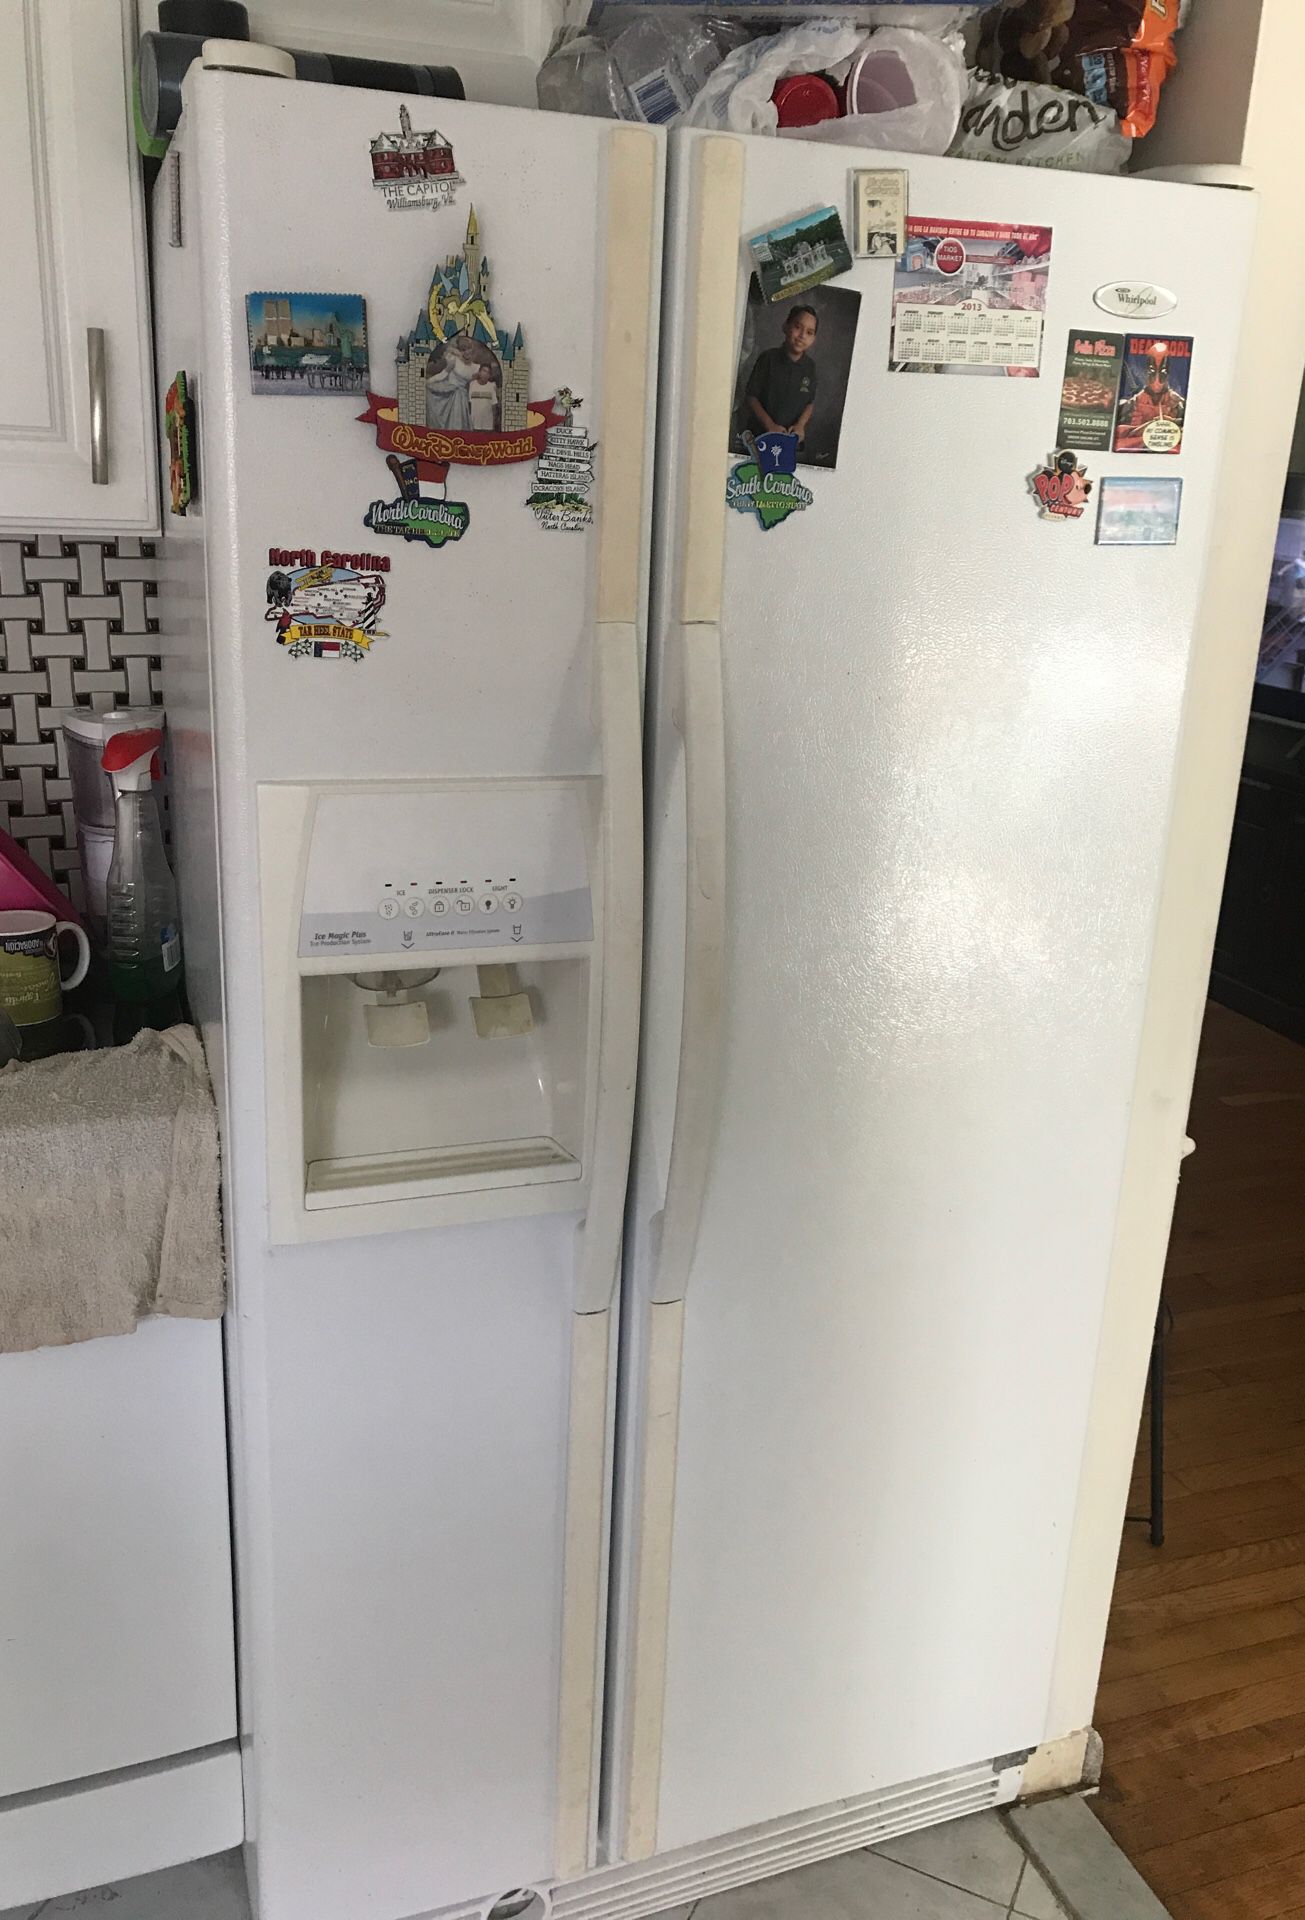 Fully operational Whirlpool Refrigerator